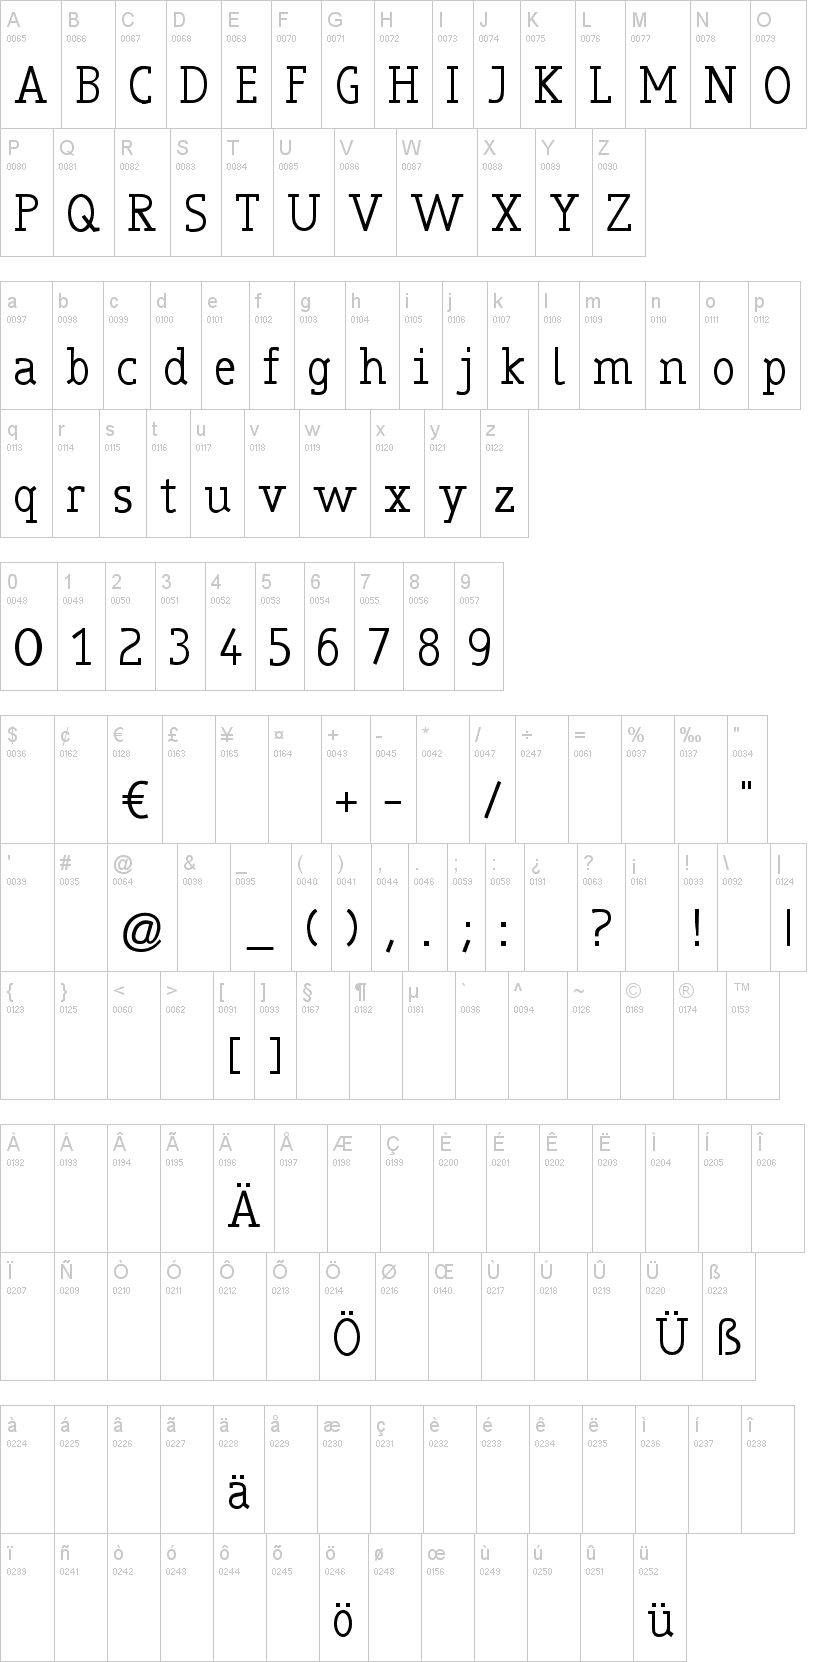 Truebo Serif